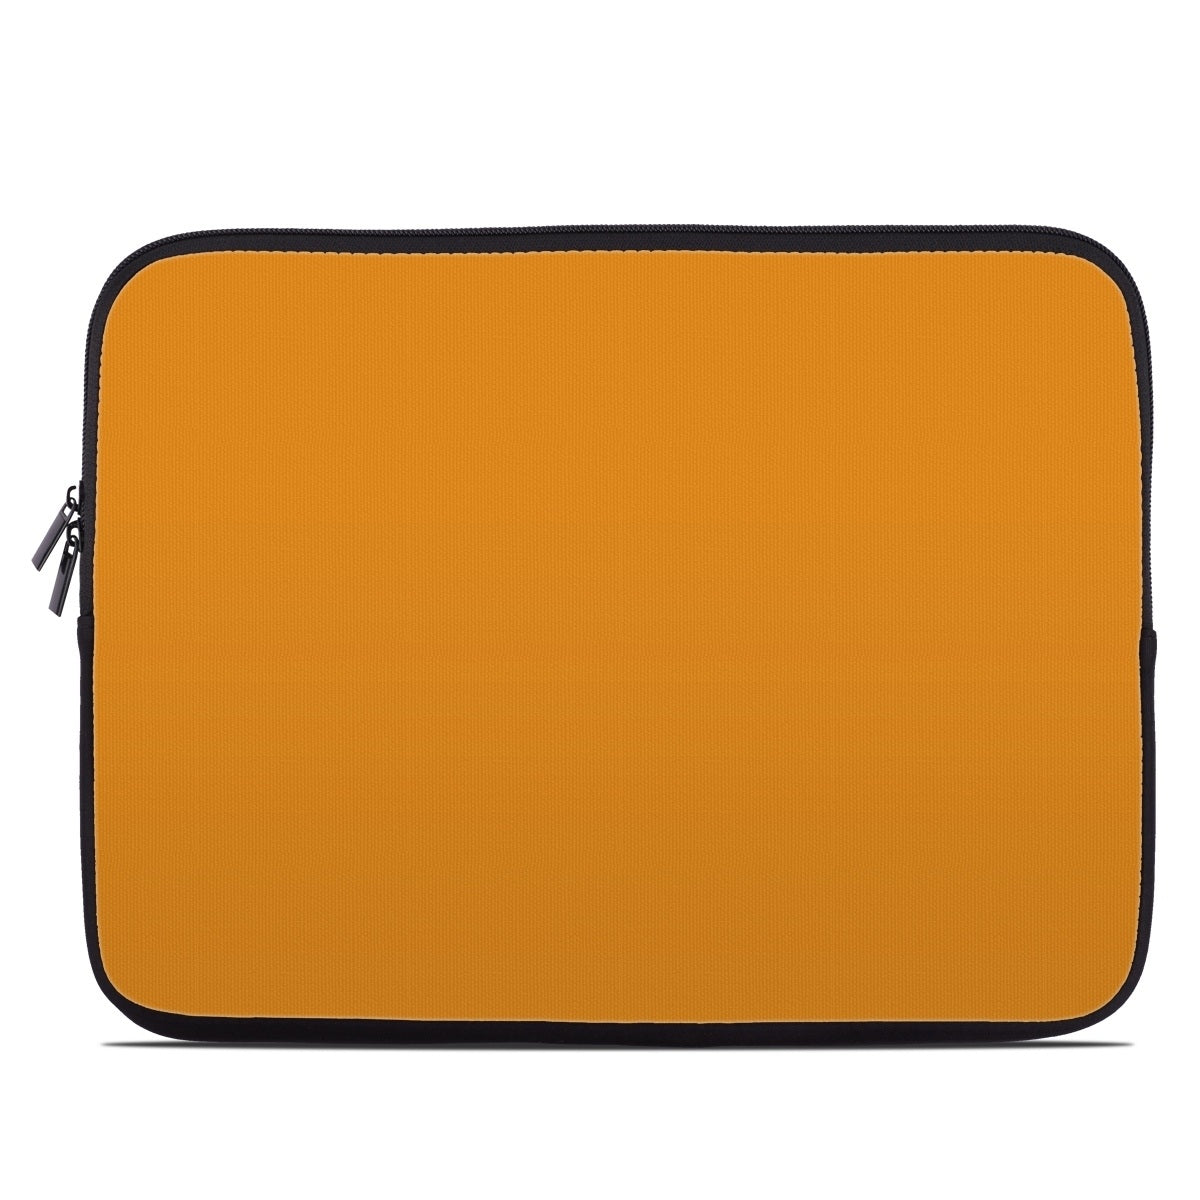 Solid State Orange - Laptop Sleeve